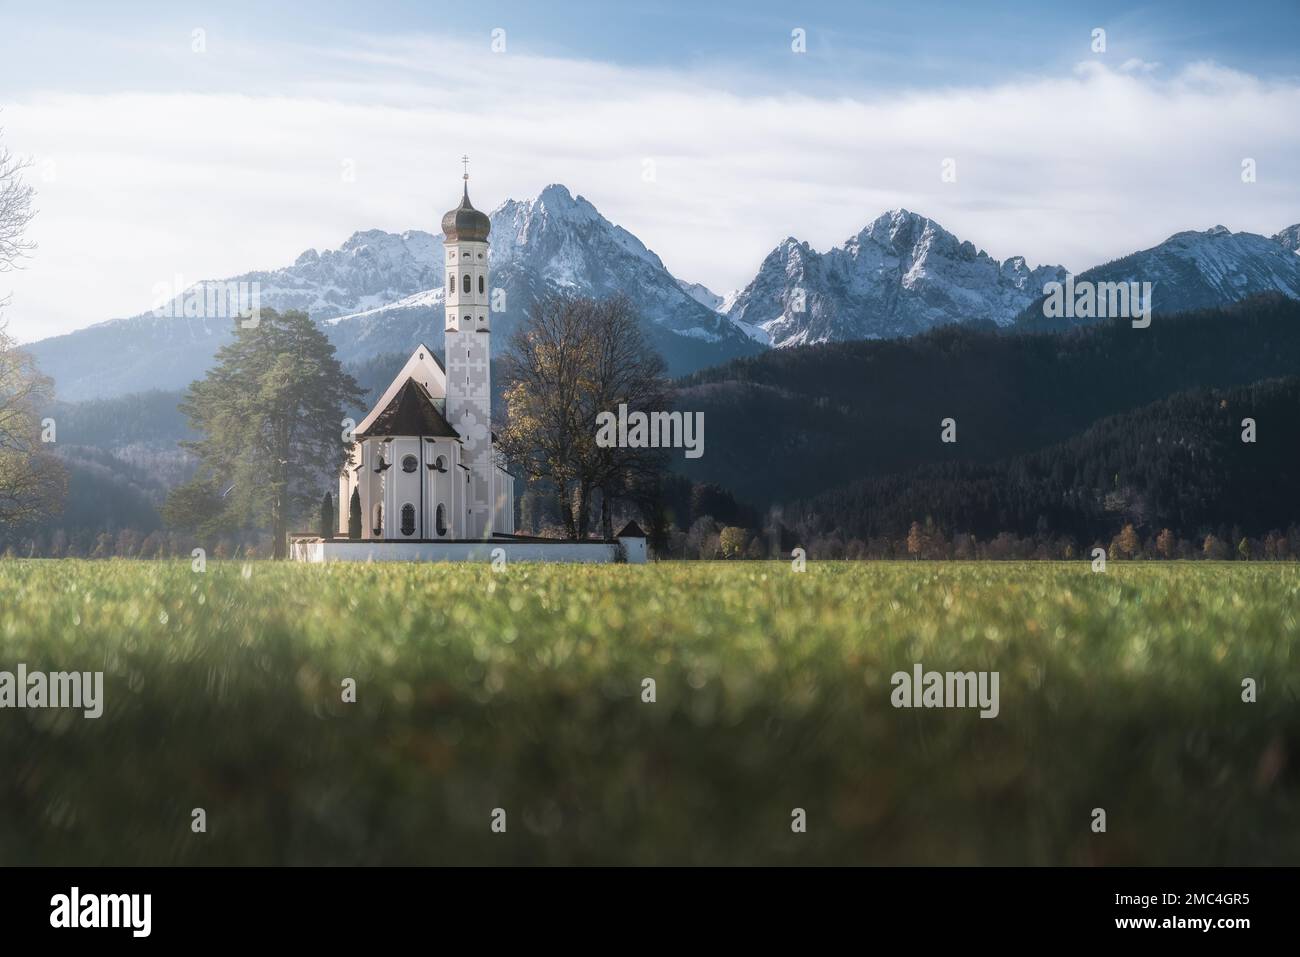 St Coloman Church with Alps Tannheim Mountains on background - Schwangau, Bavaria Stock Photo